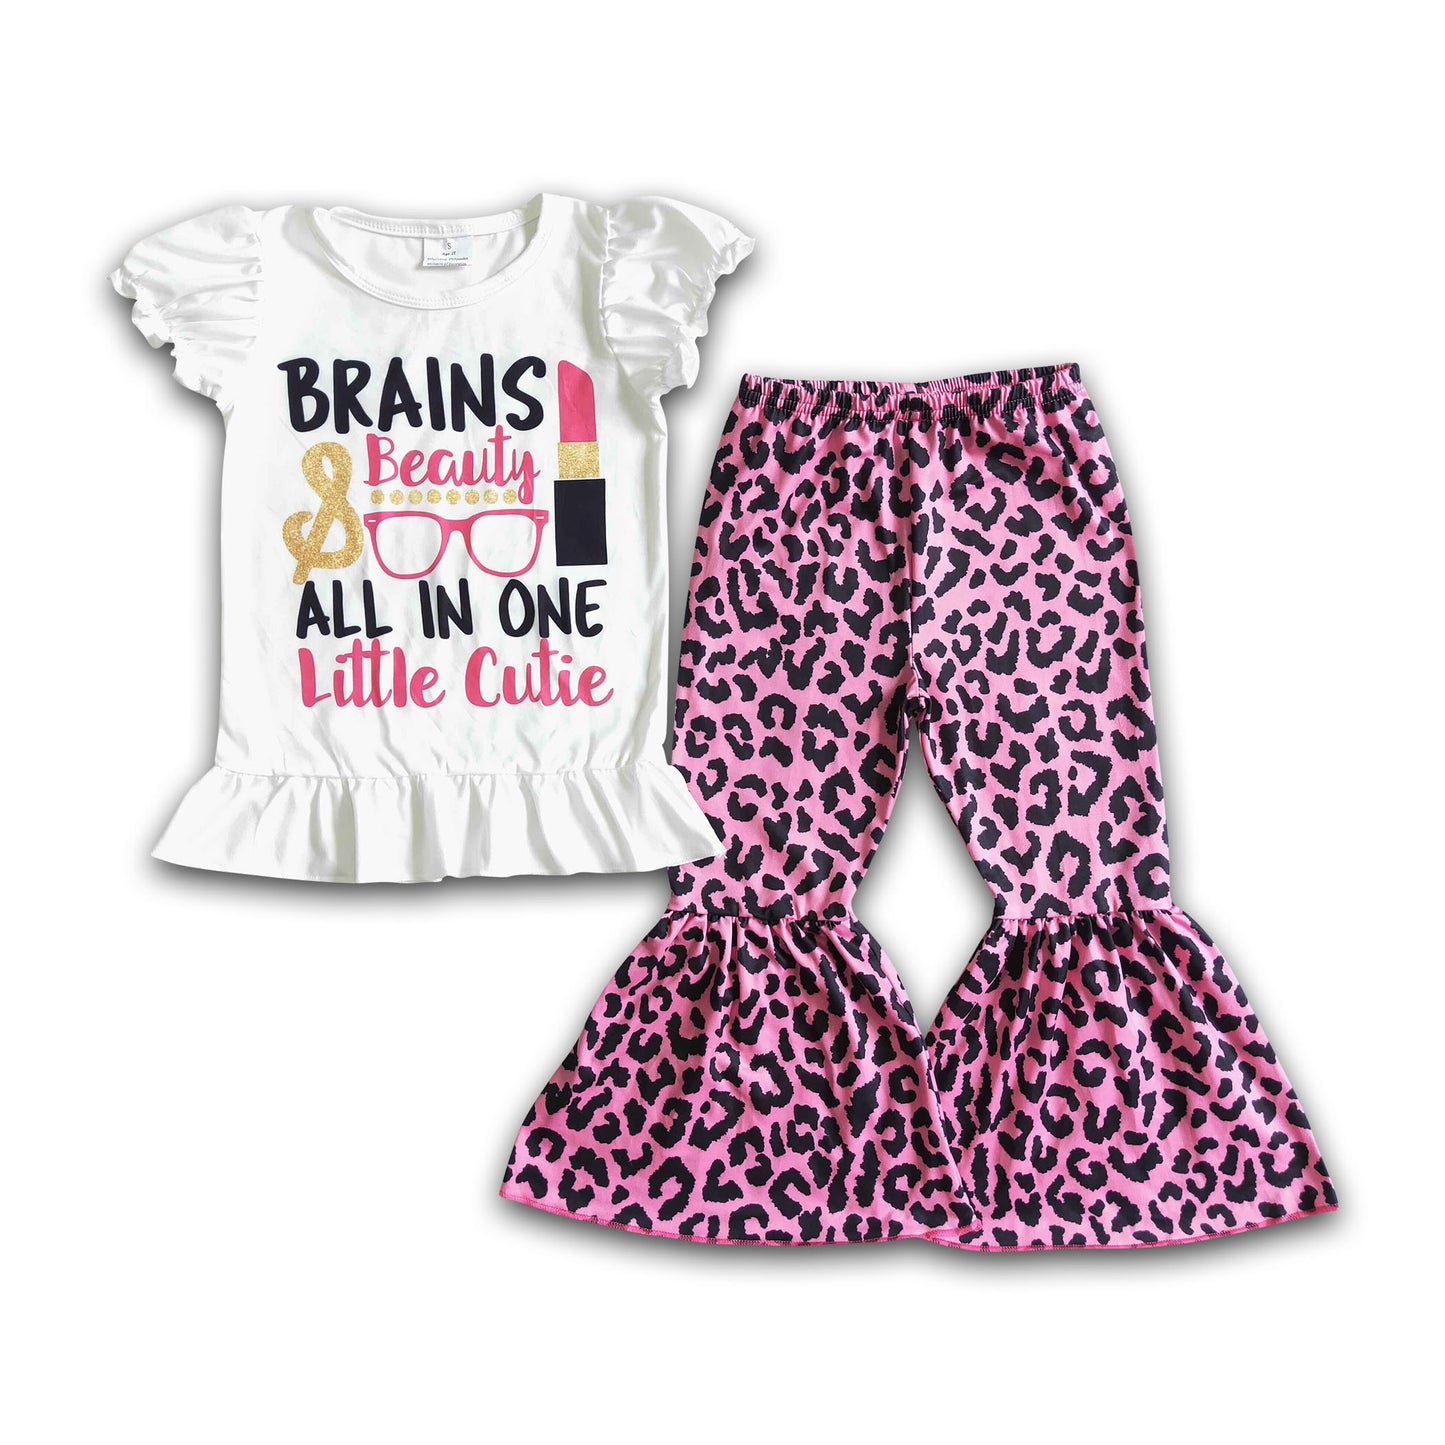 Brains beauty all in little one cutie leopard girls clothing set